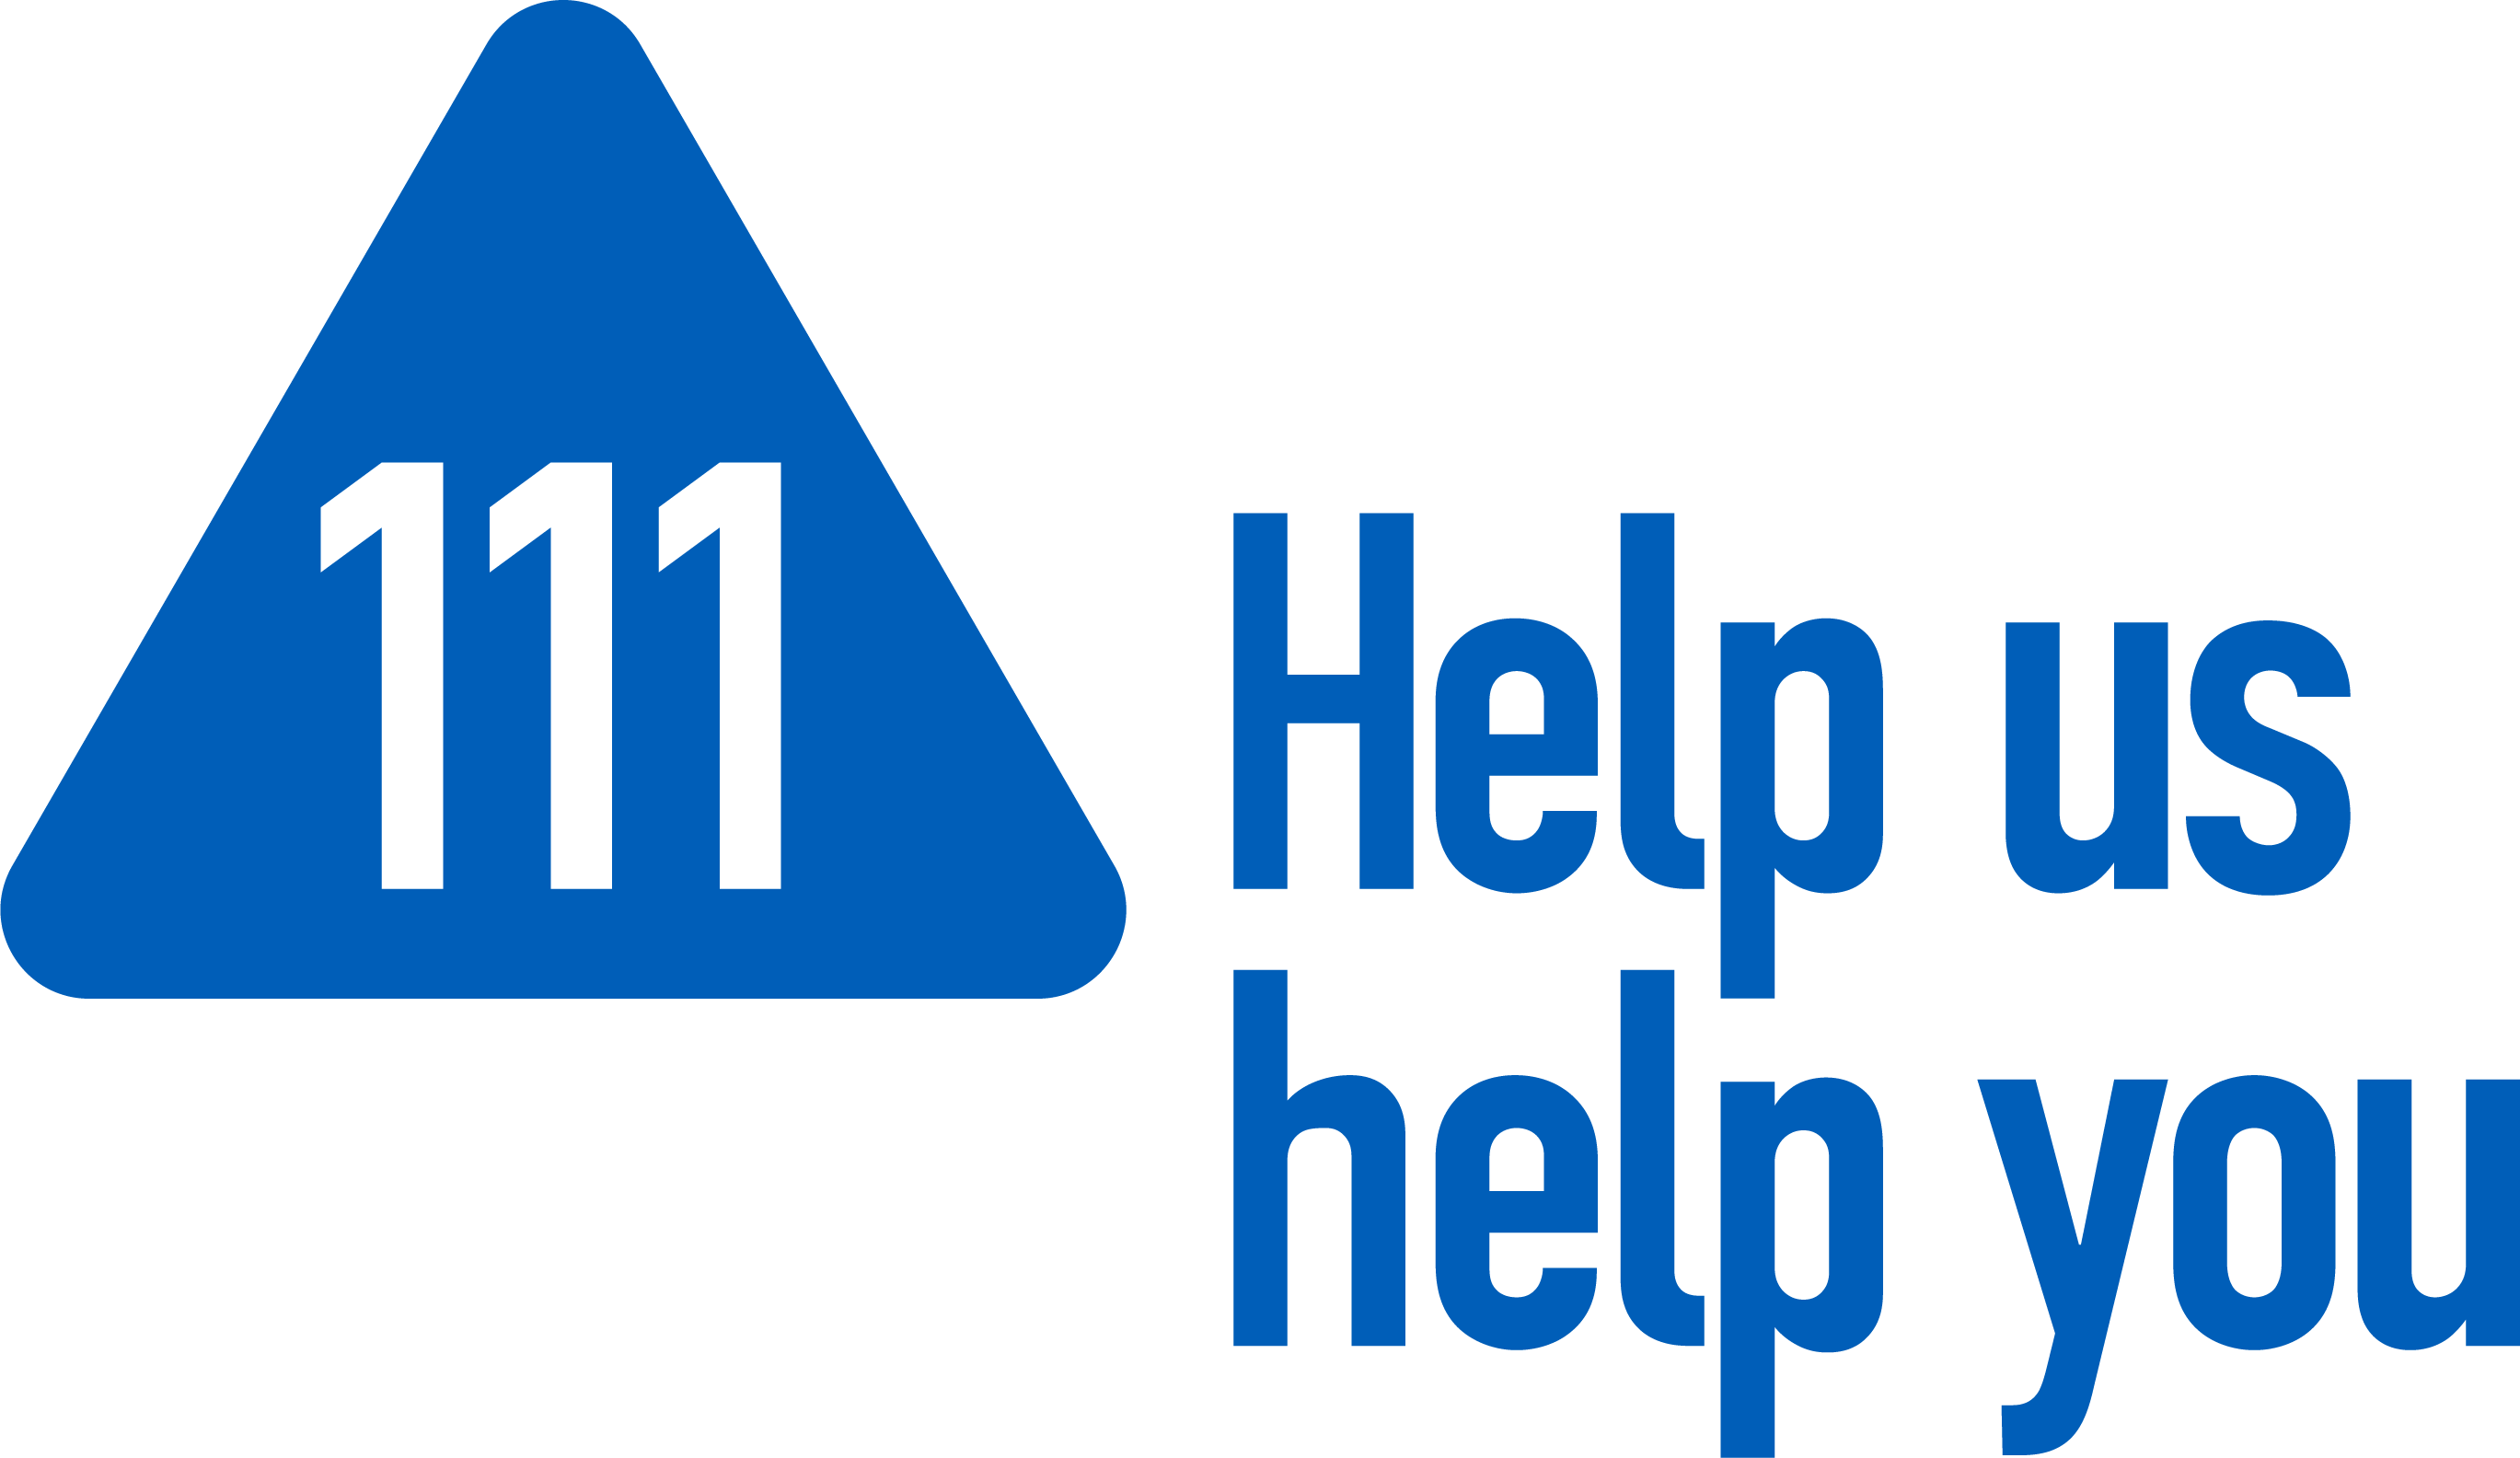 111 Help us help you